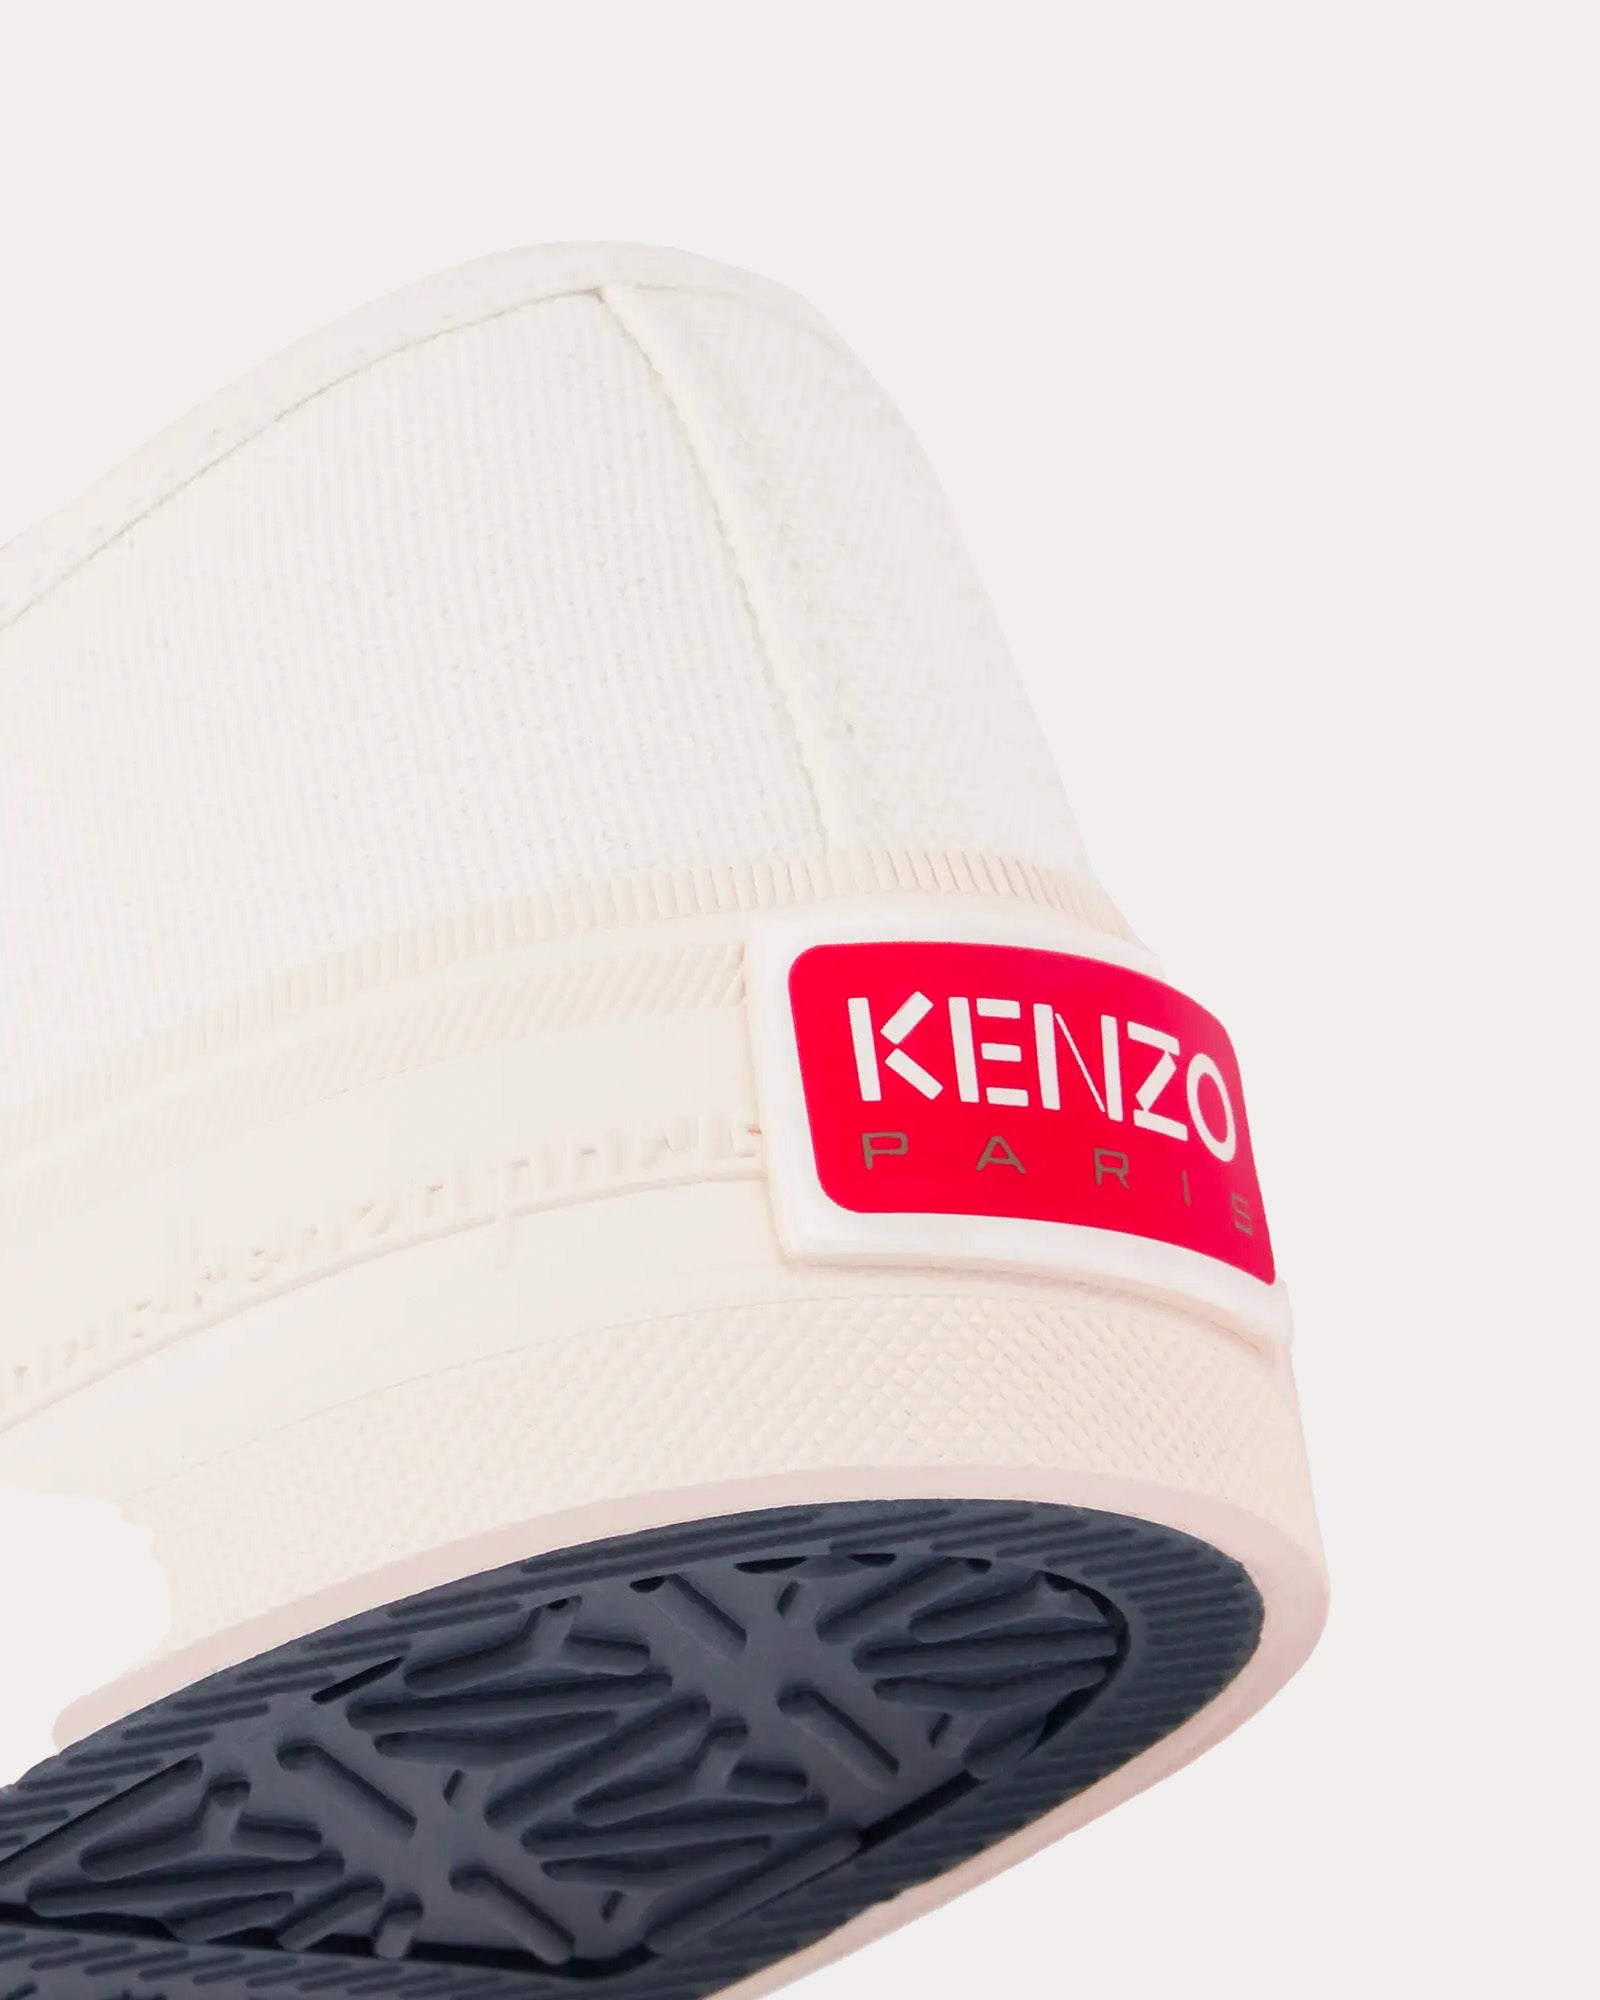 Kenzo - Kenzo Foxy Canvas White Low Top Sneakers